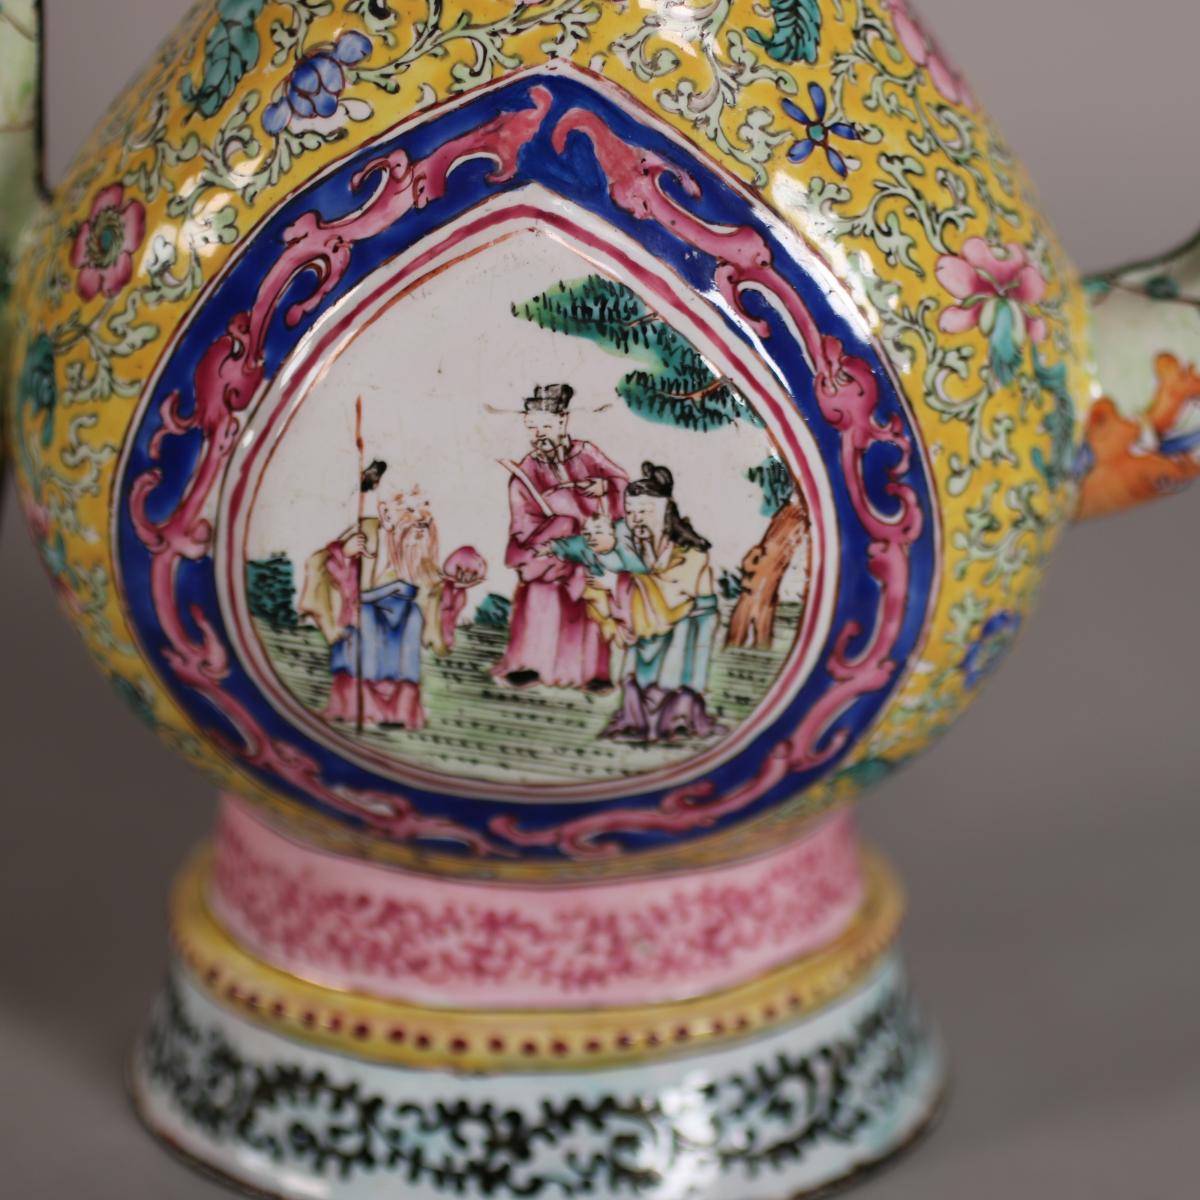 Chinese Canton enamel ewer, late 18th century